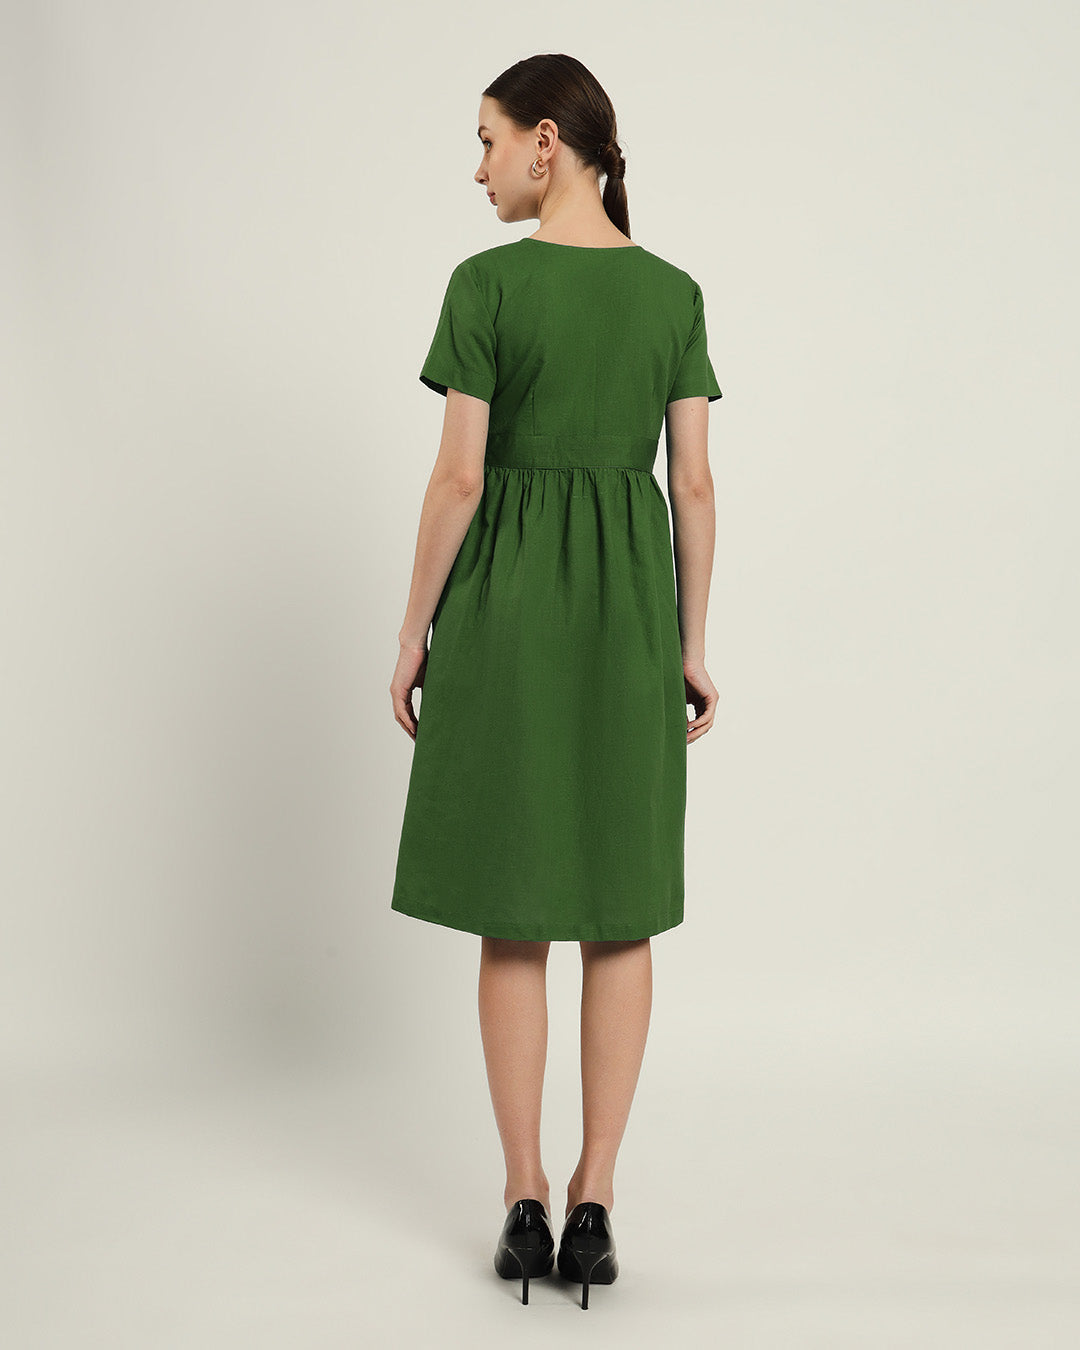 The Miyoshi Emerald Dress